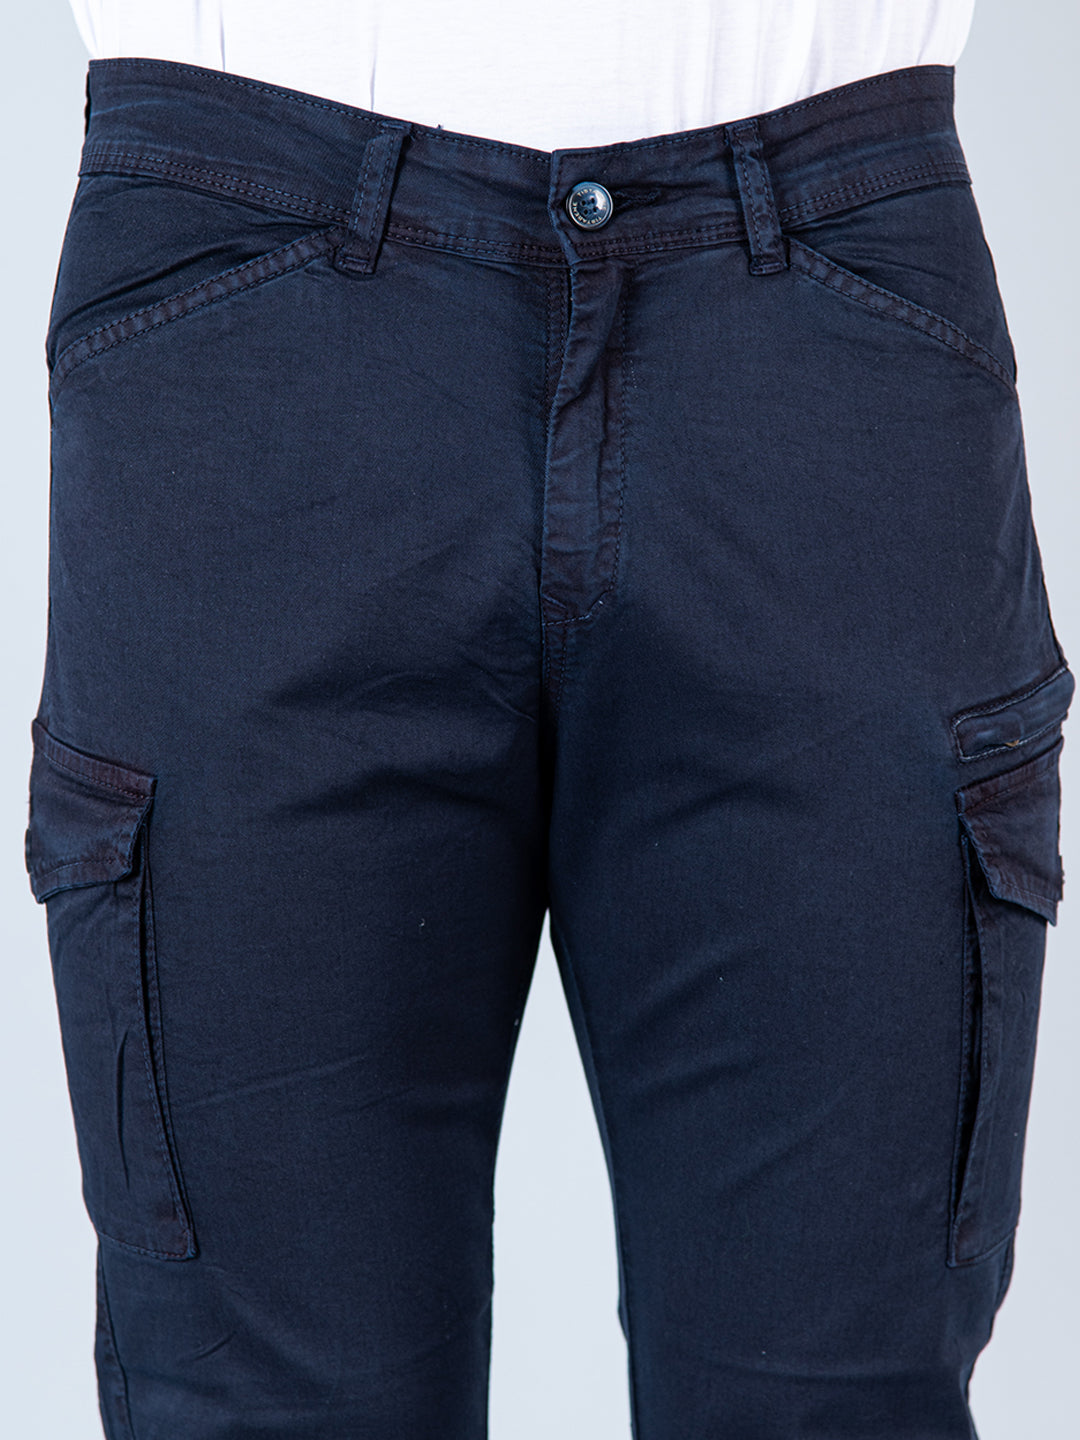 Buy SKENJEL Men's Casual Cotton Loose Denim Cargo Pants (28, Navy Blue) at  Amazon.in